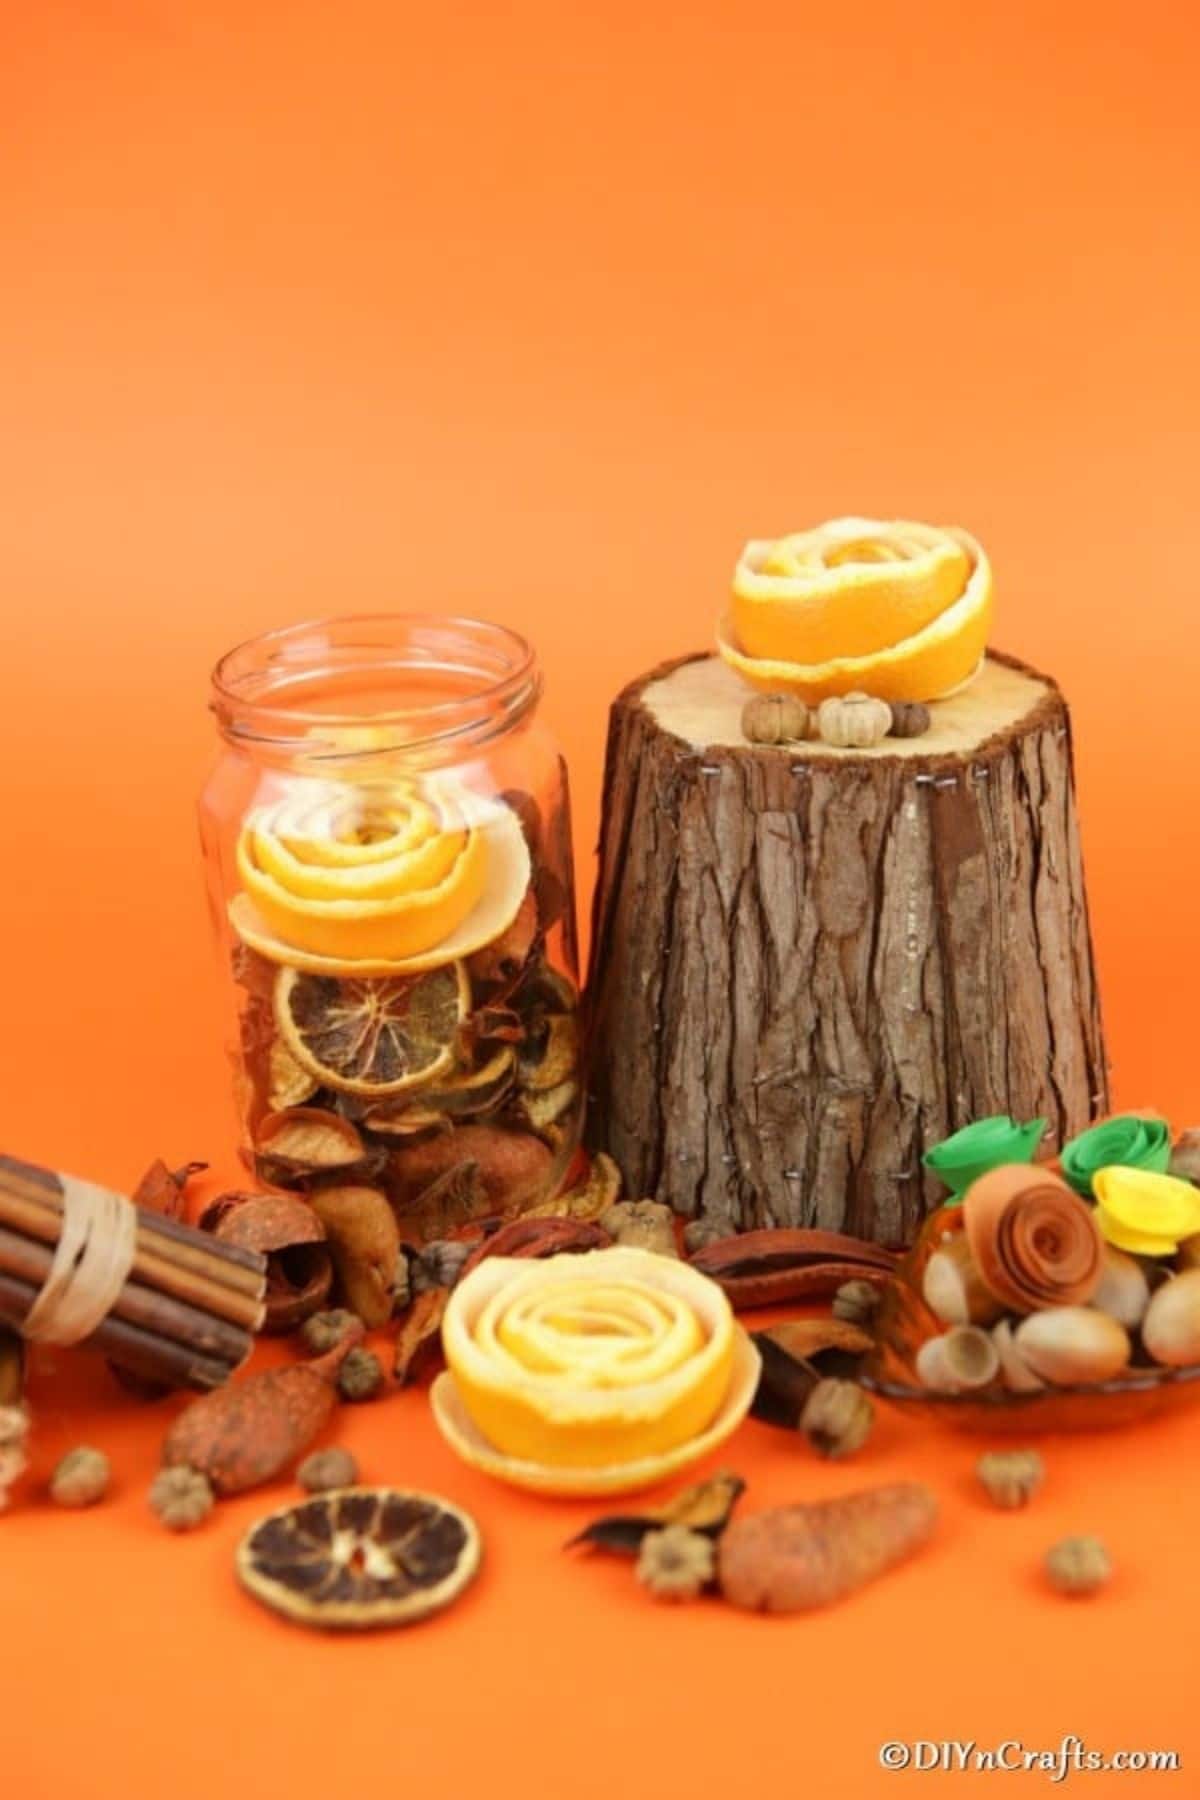 Orange Peel Uses 10 - Exciting Things To Do With Orange Peels